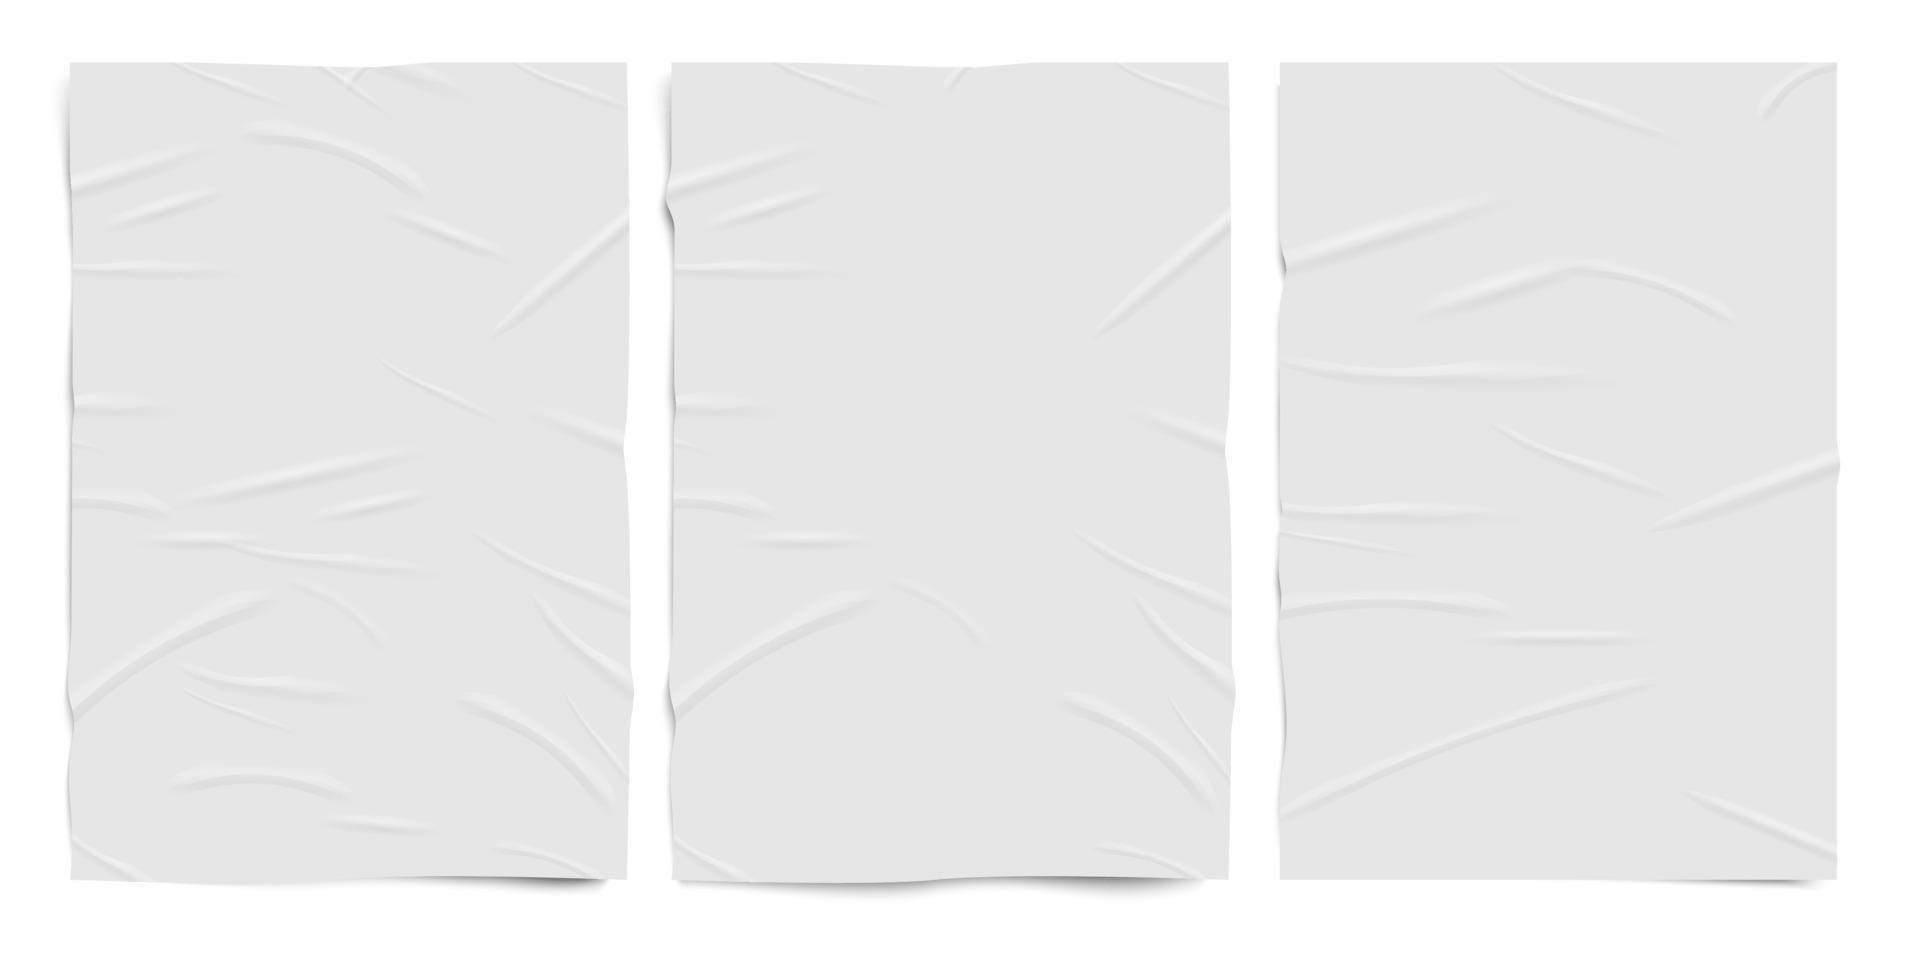 textura de papel branco mal colado, folhas de papel molhado com efeito enrugado, conjunto realista de vetores